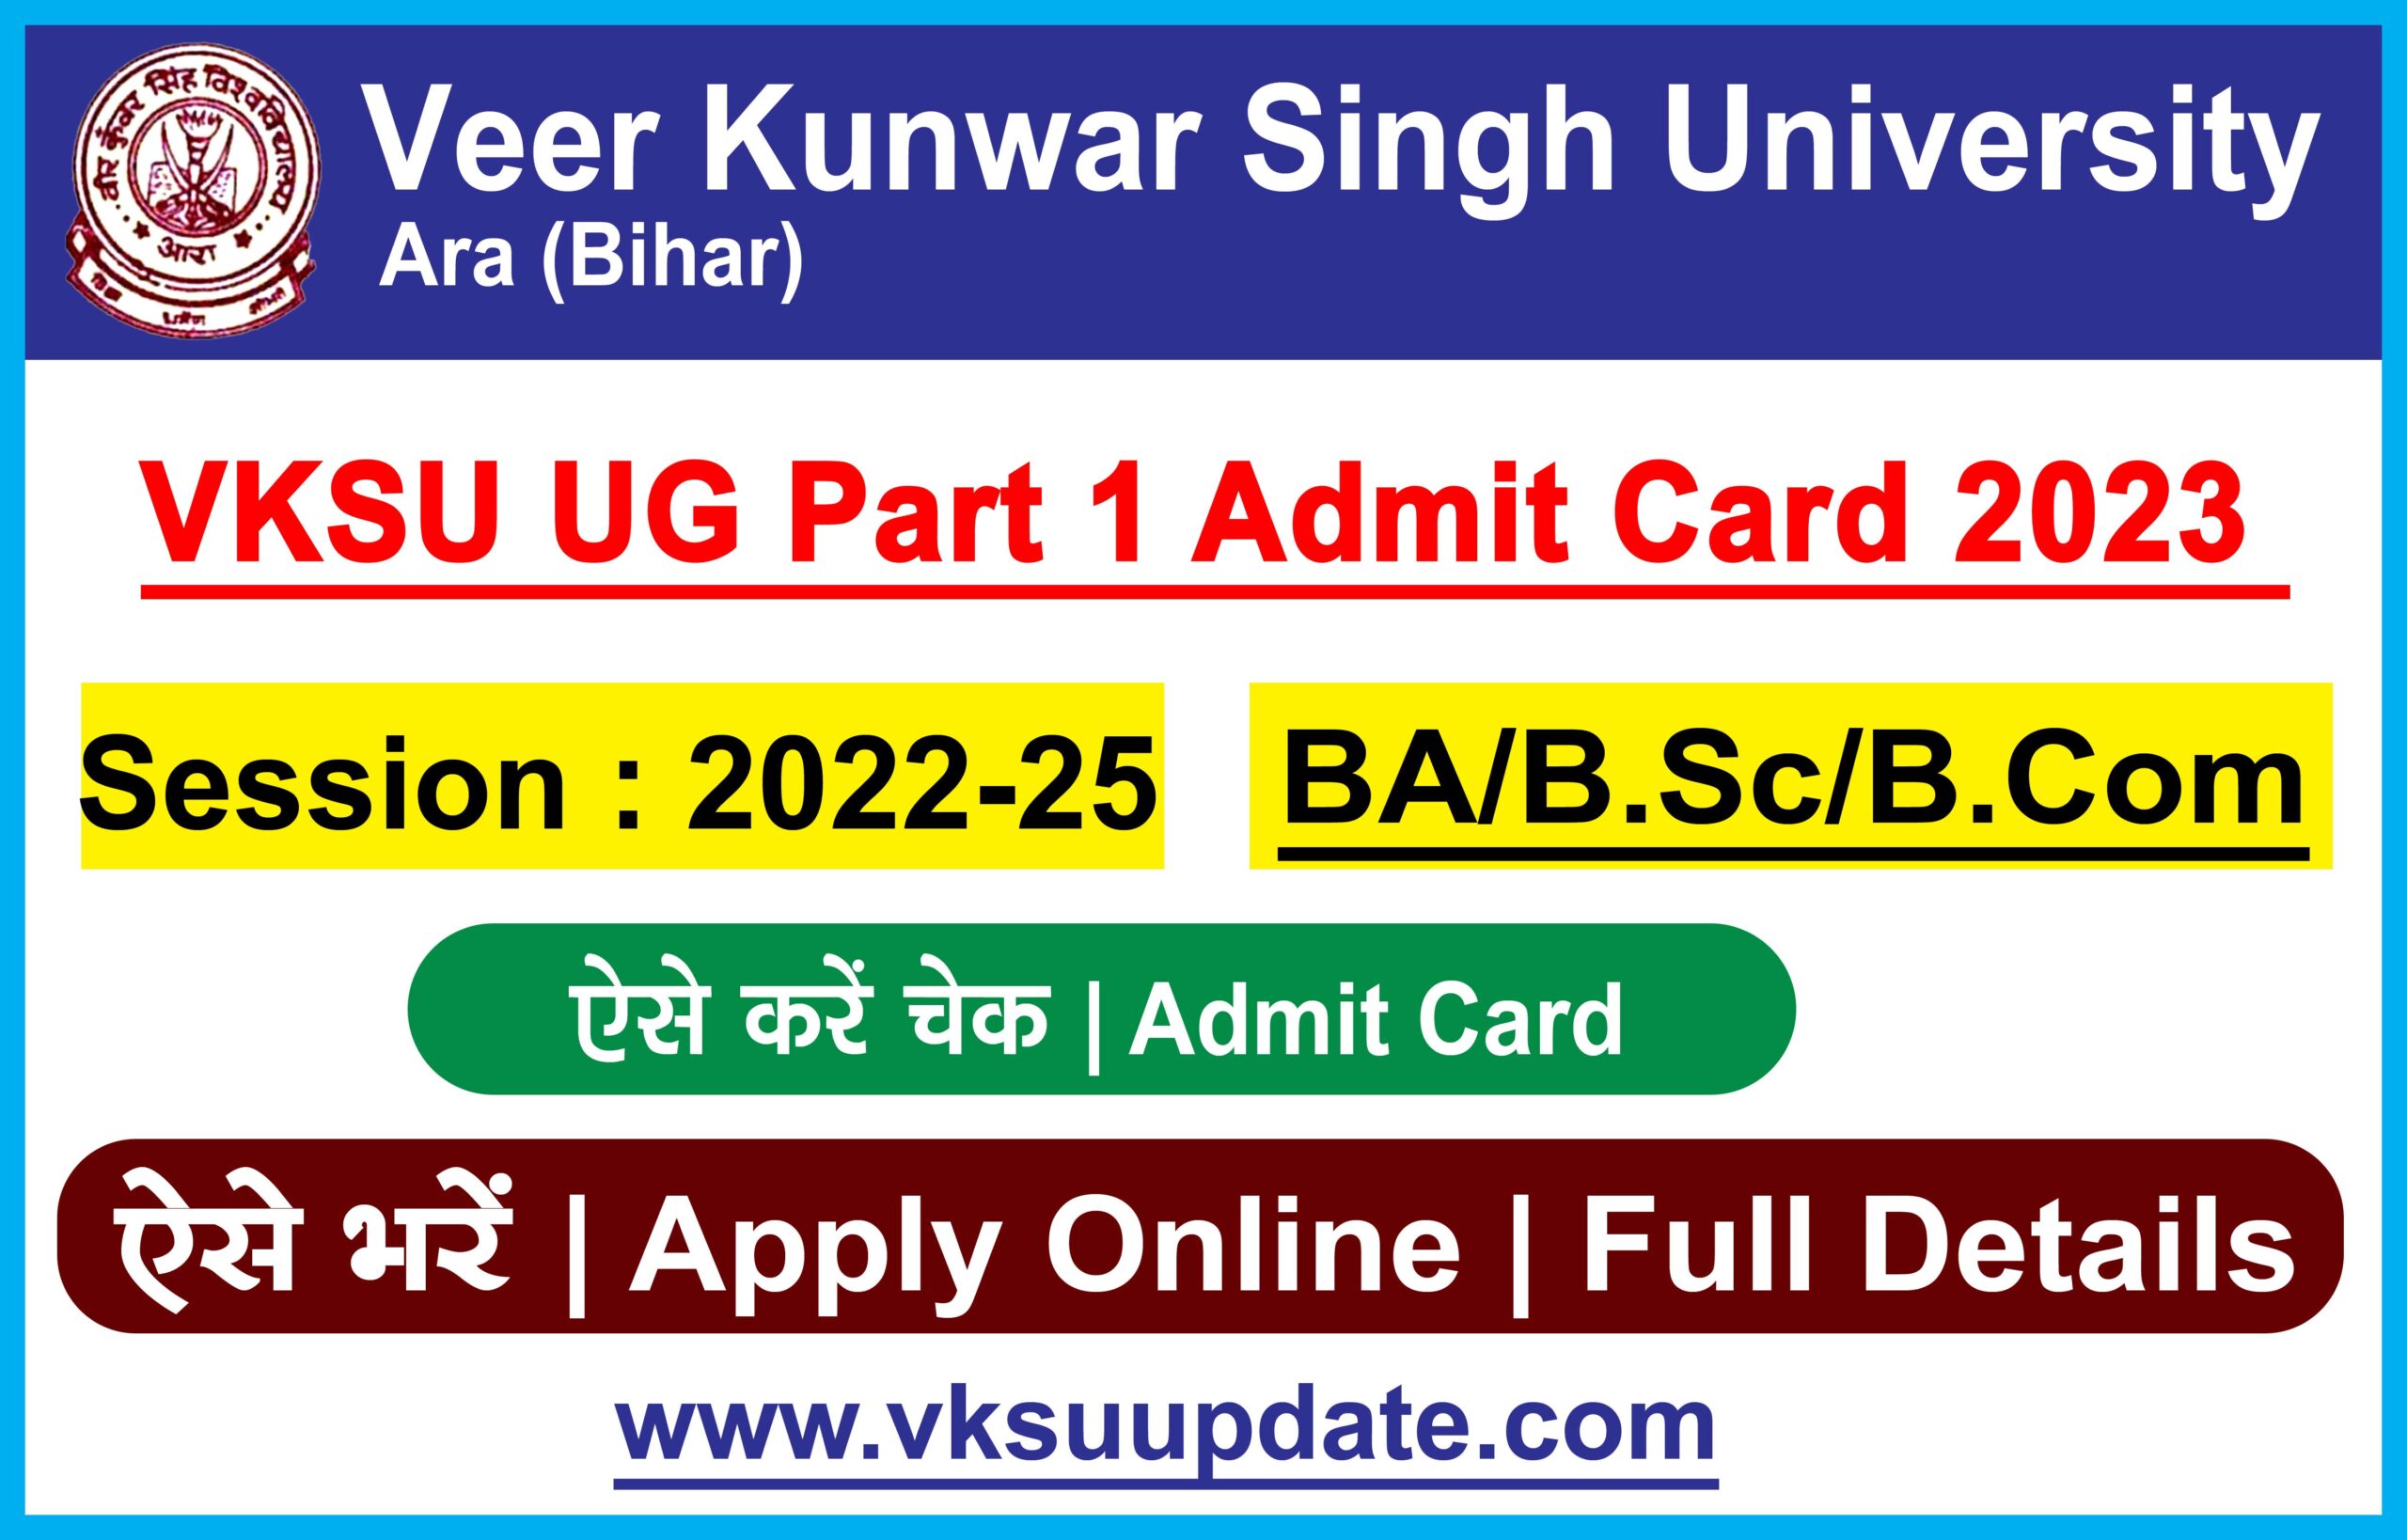 VKSU UG Part 1 Admit Card Session 2022-25